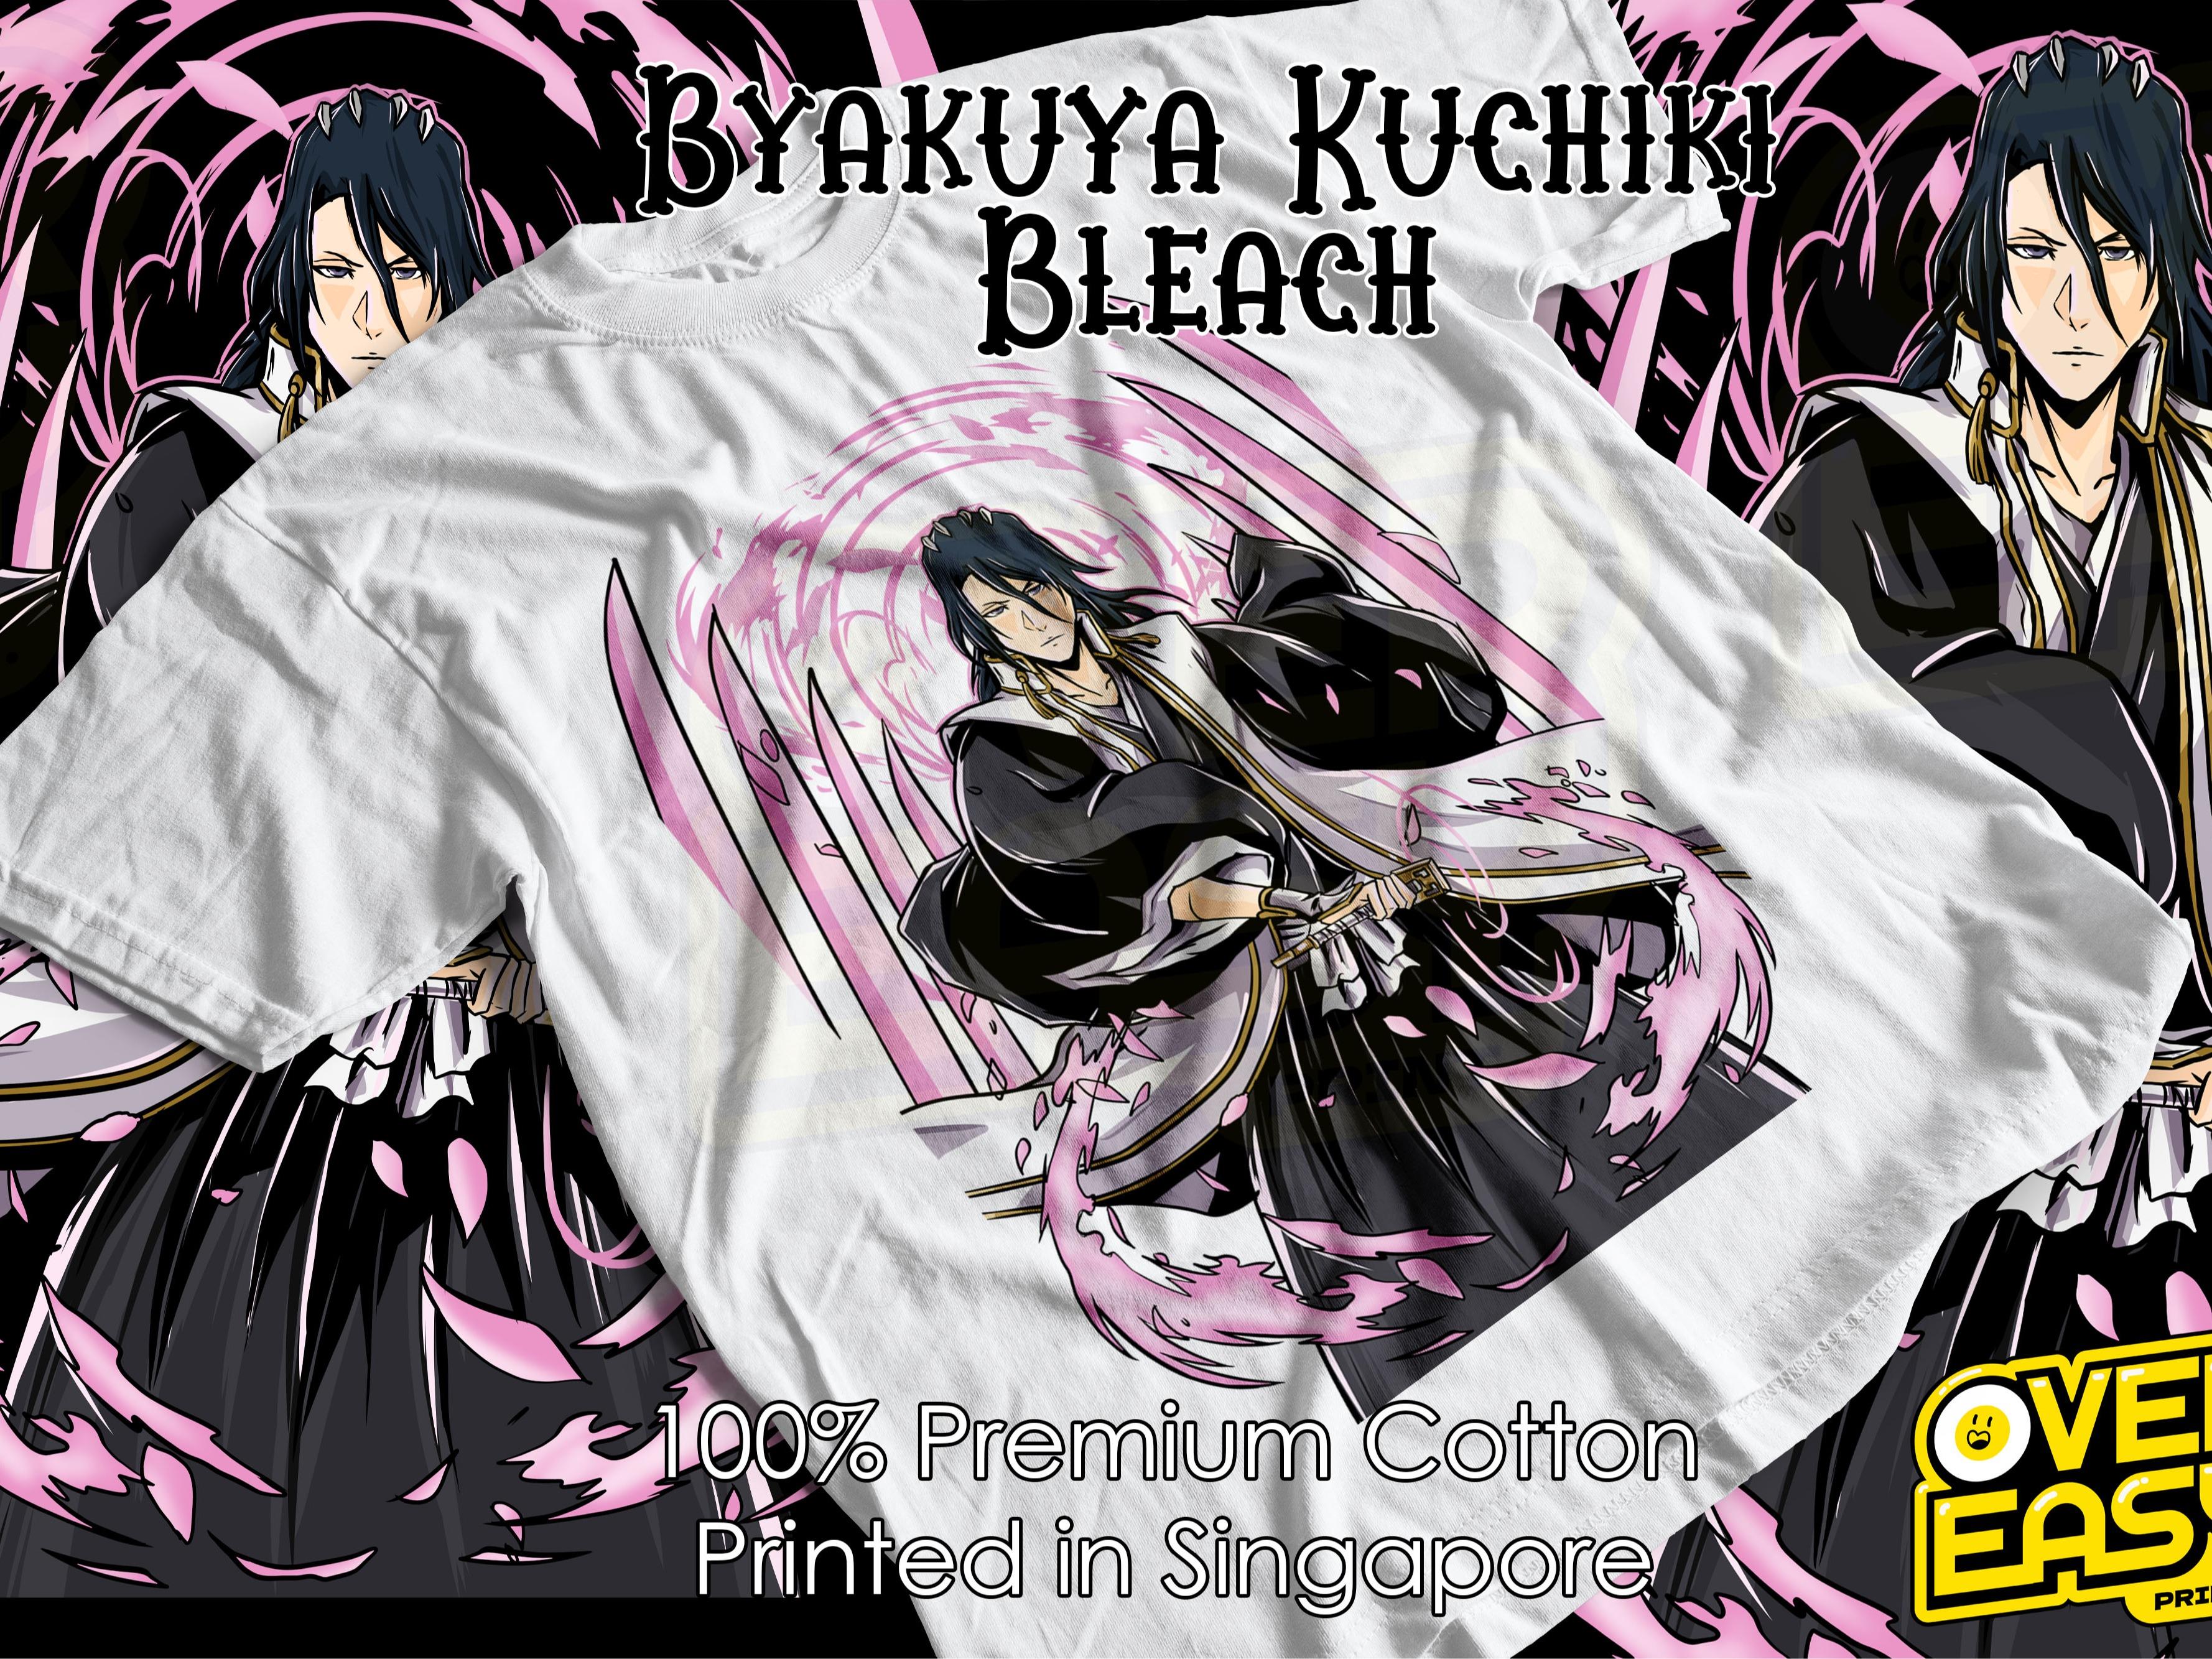 Byakuya Kuchiki Bleach Anime Fanart T-Shirt